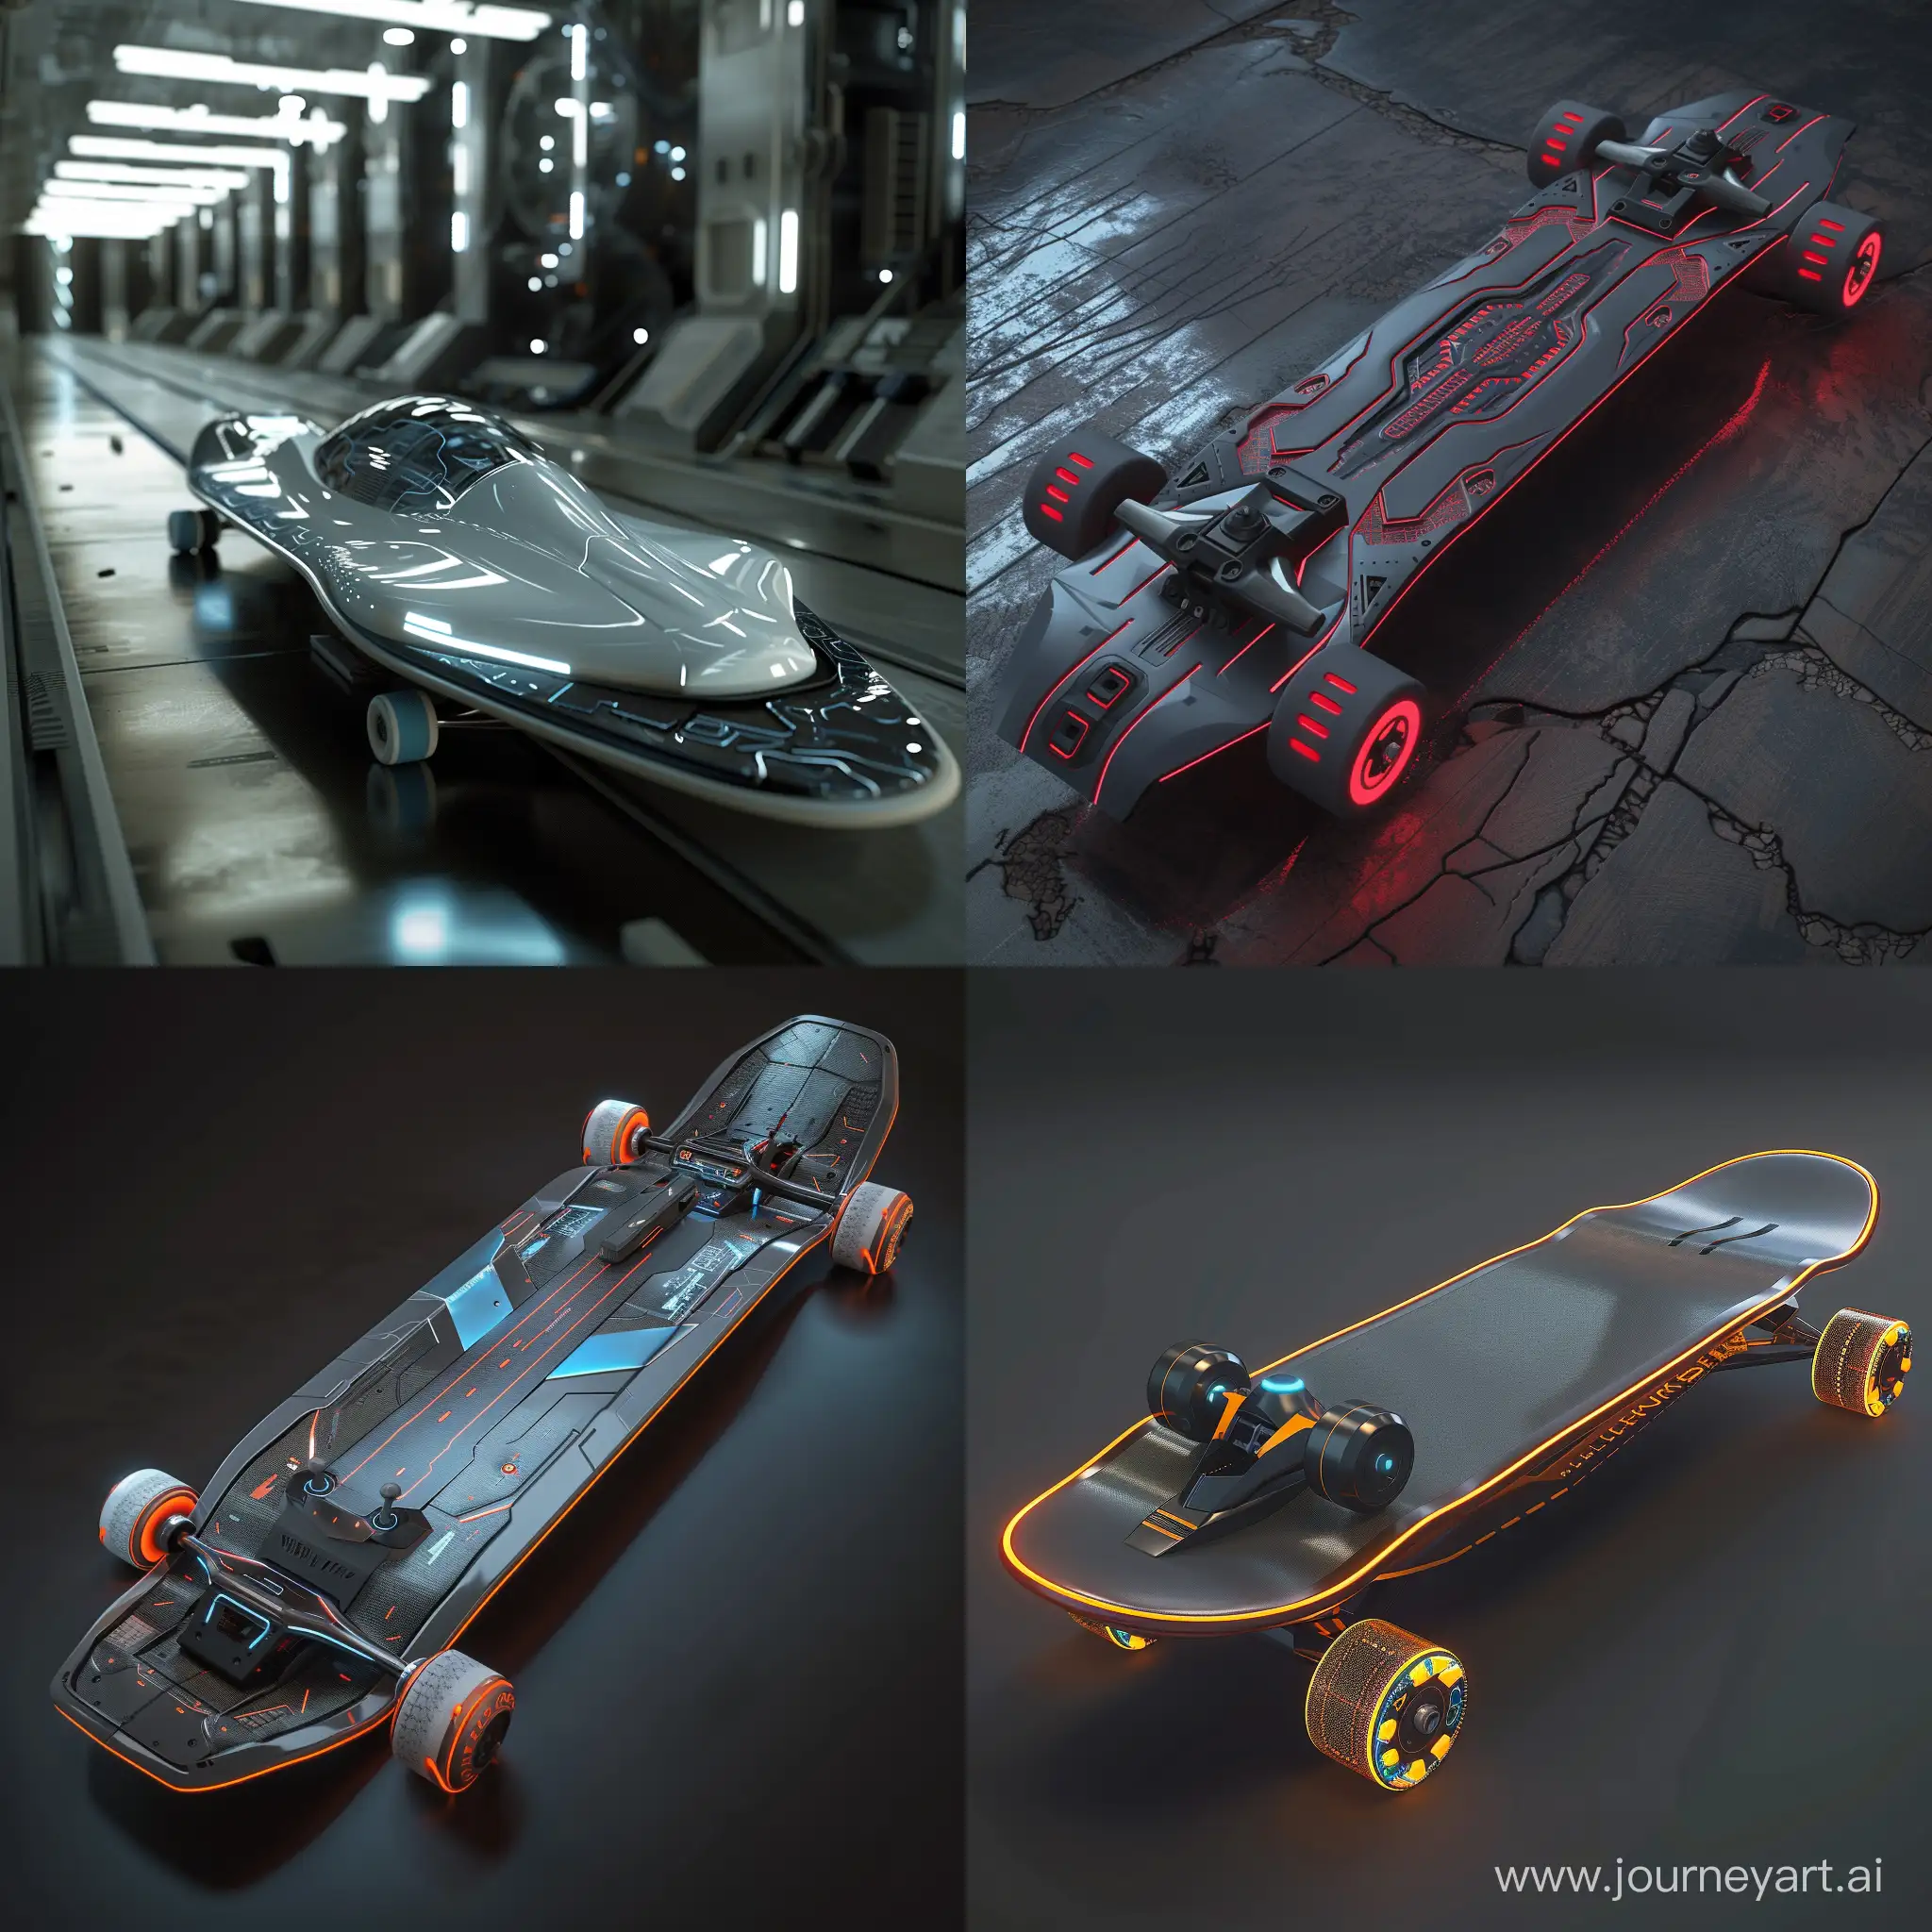 Futuristic-Skateboard-in-a-HighTech-World